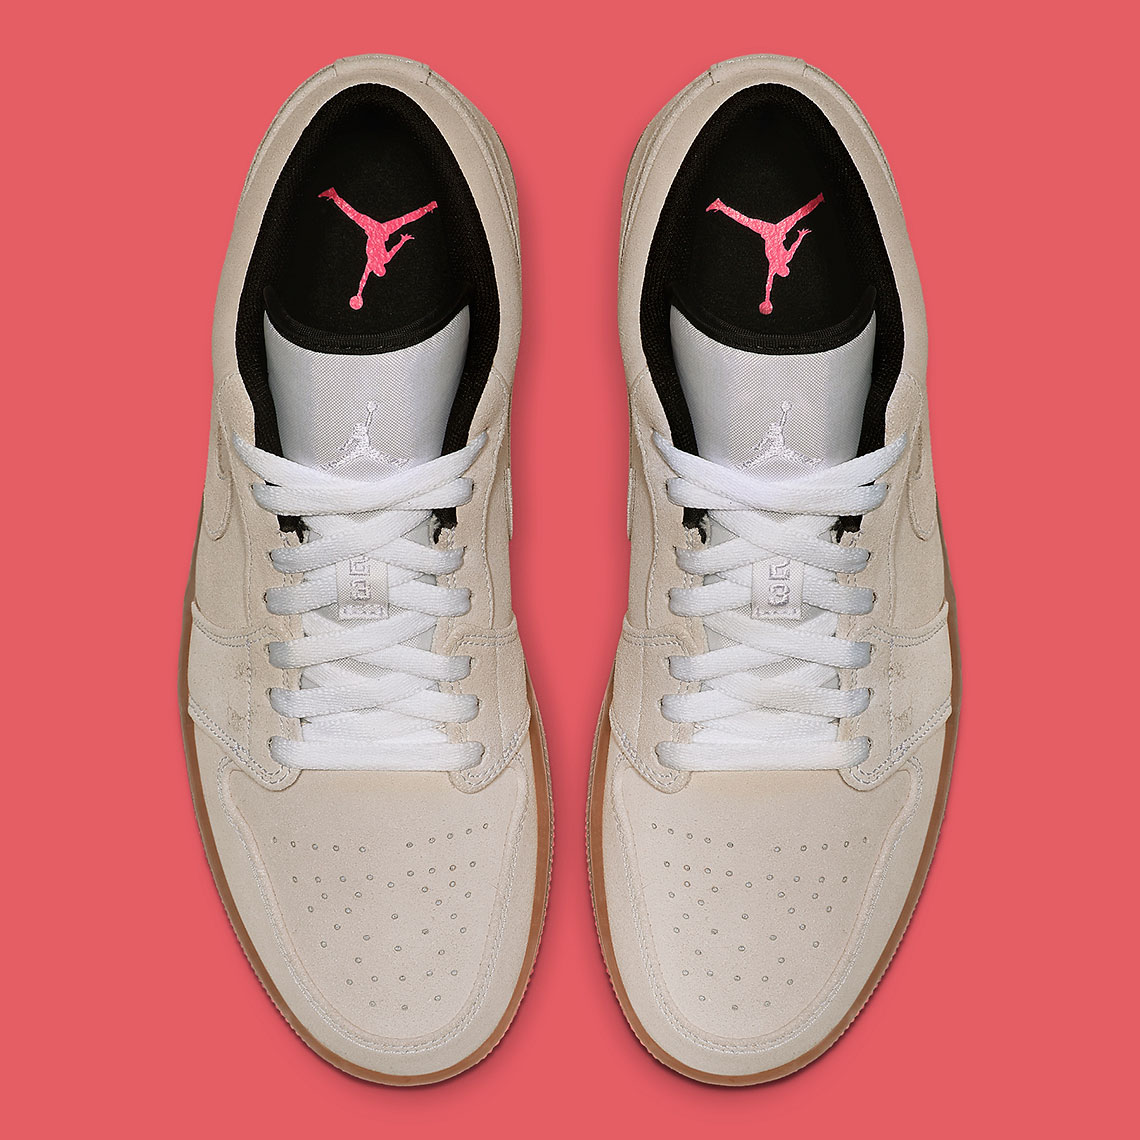 Jordan 1 Low Beige Suede 553558 119 Release Info | SneakerNews.com